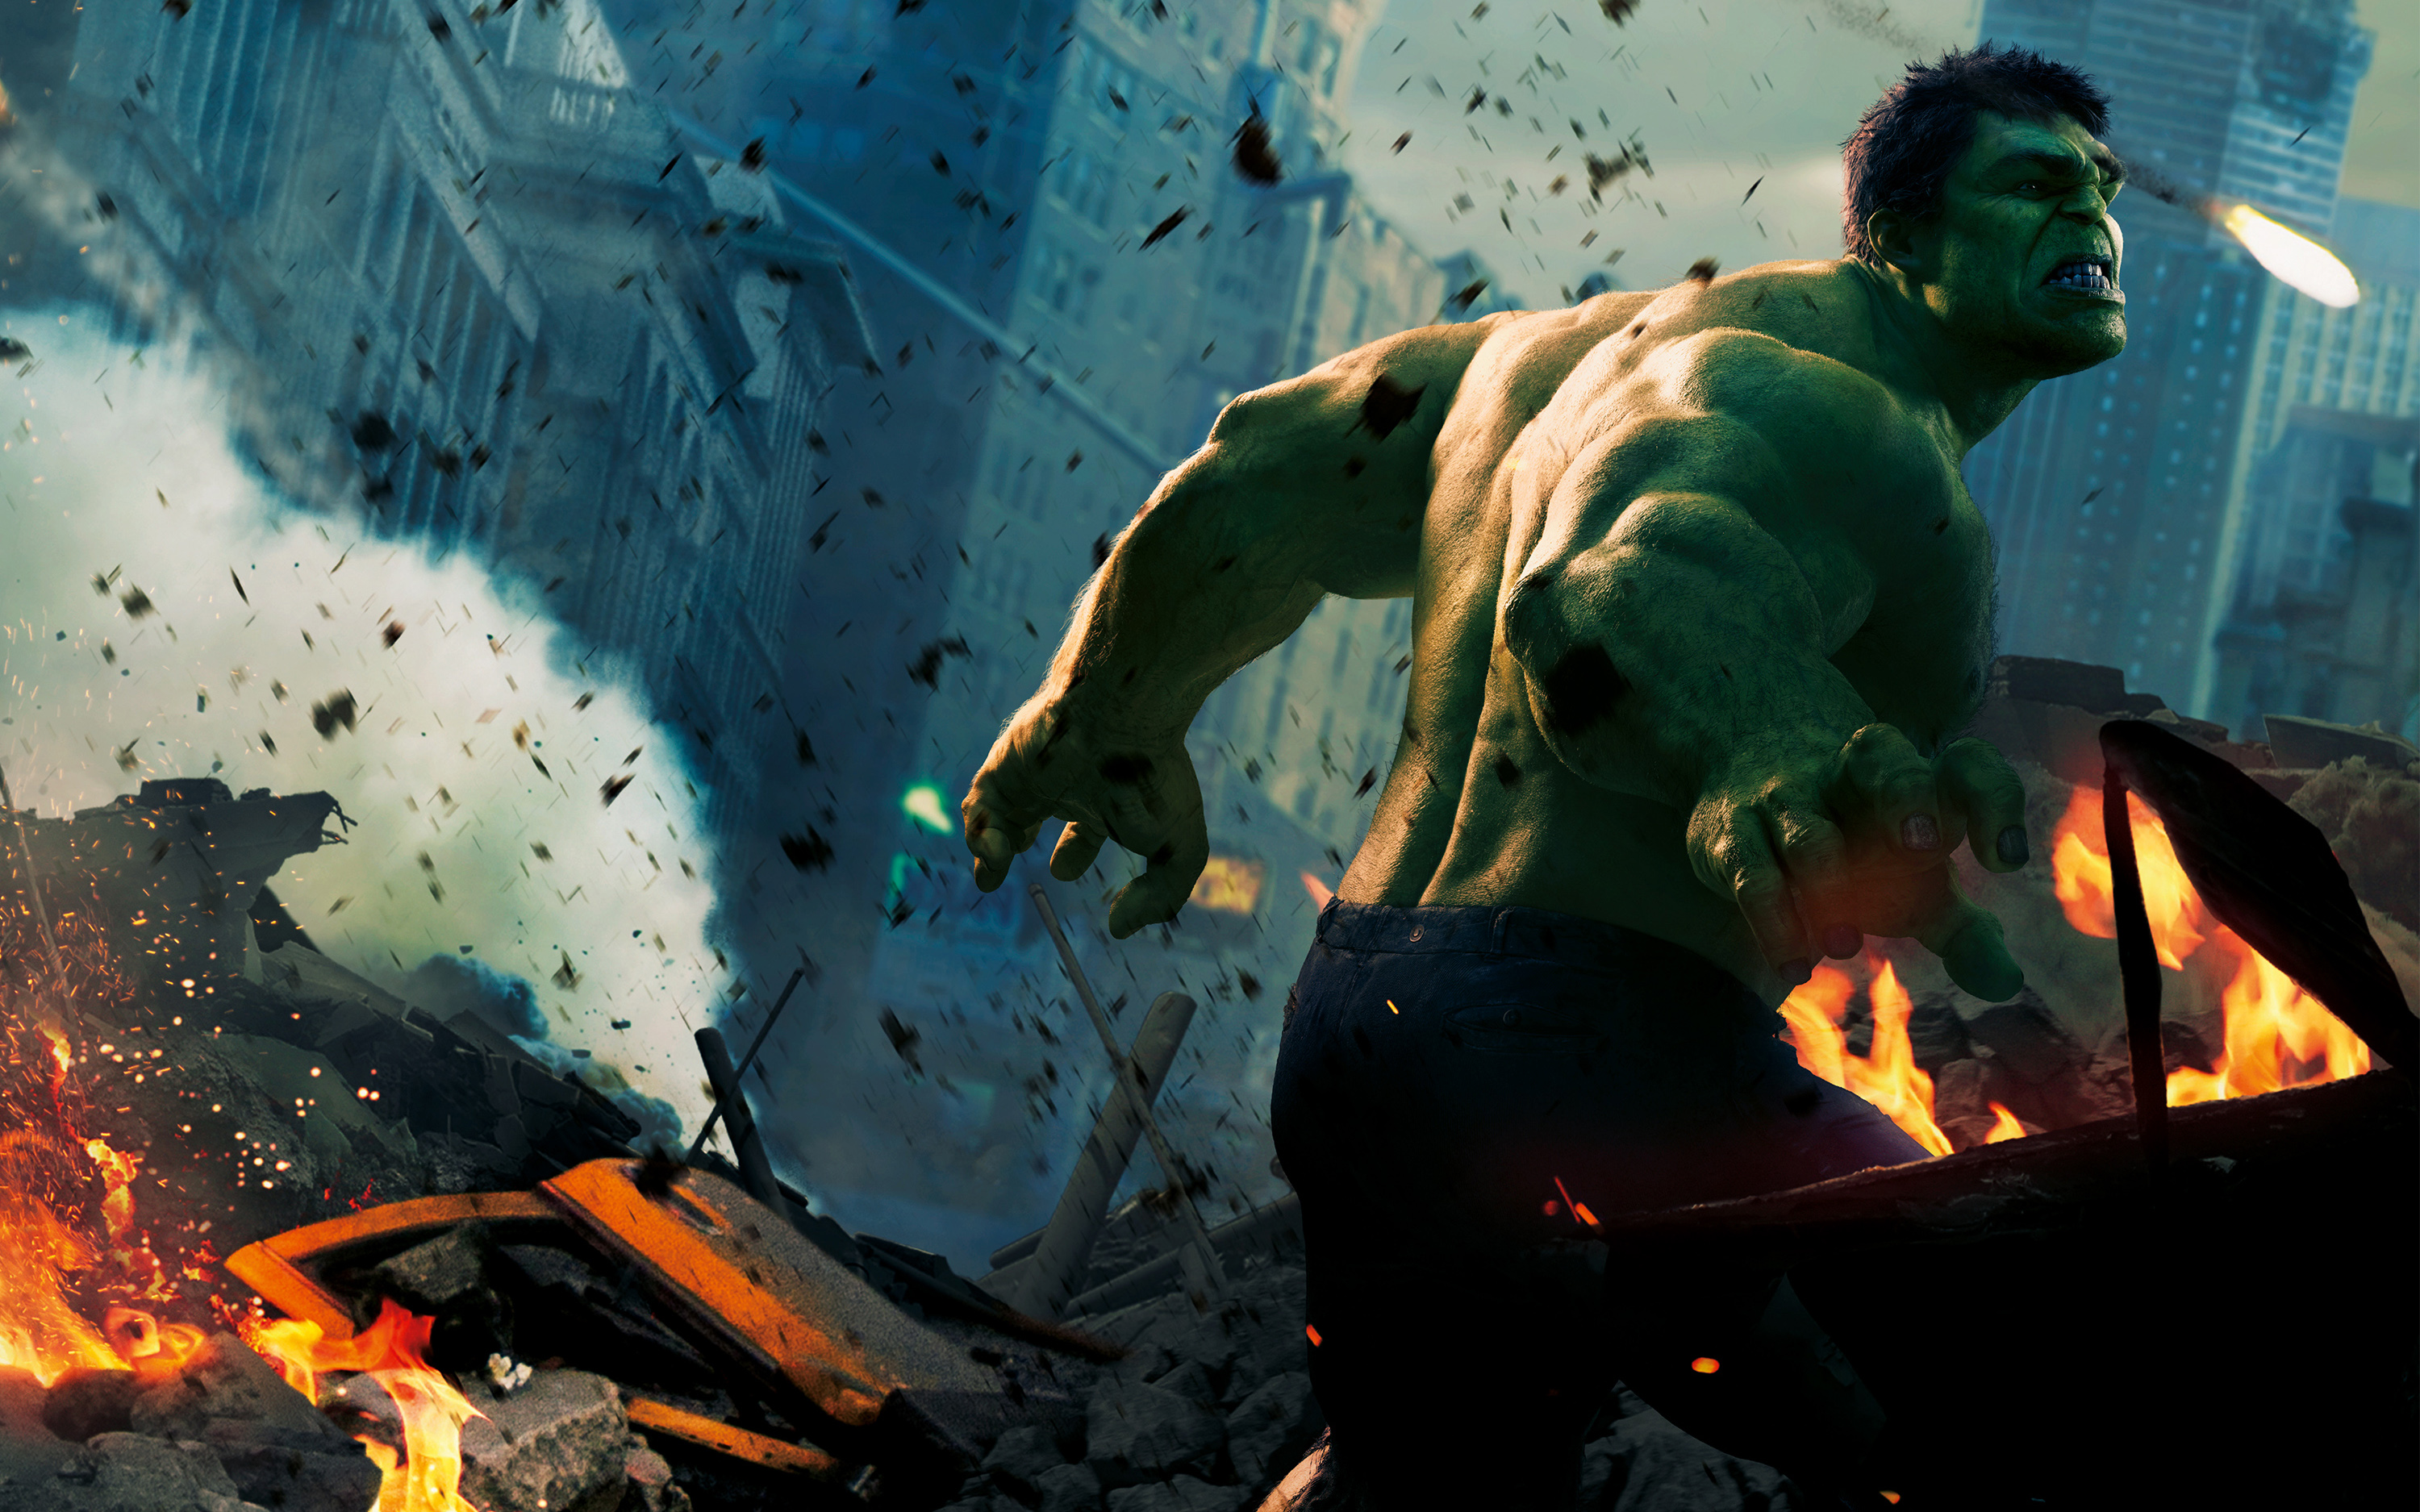 Hulk in 2012 Avengers wallpaper download